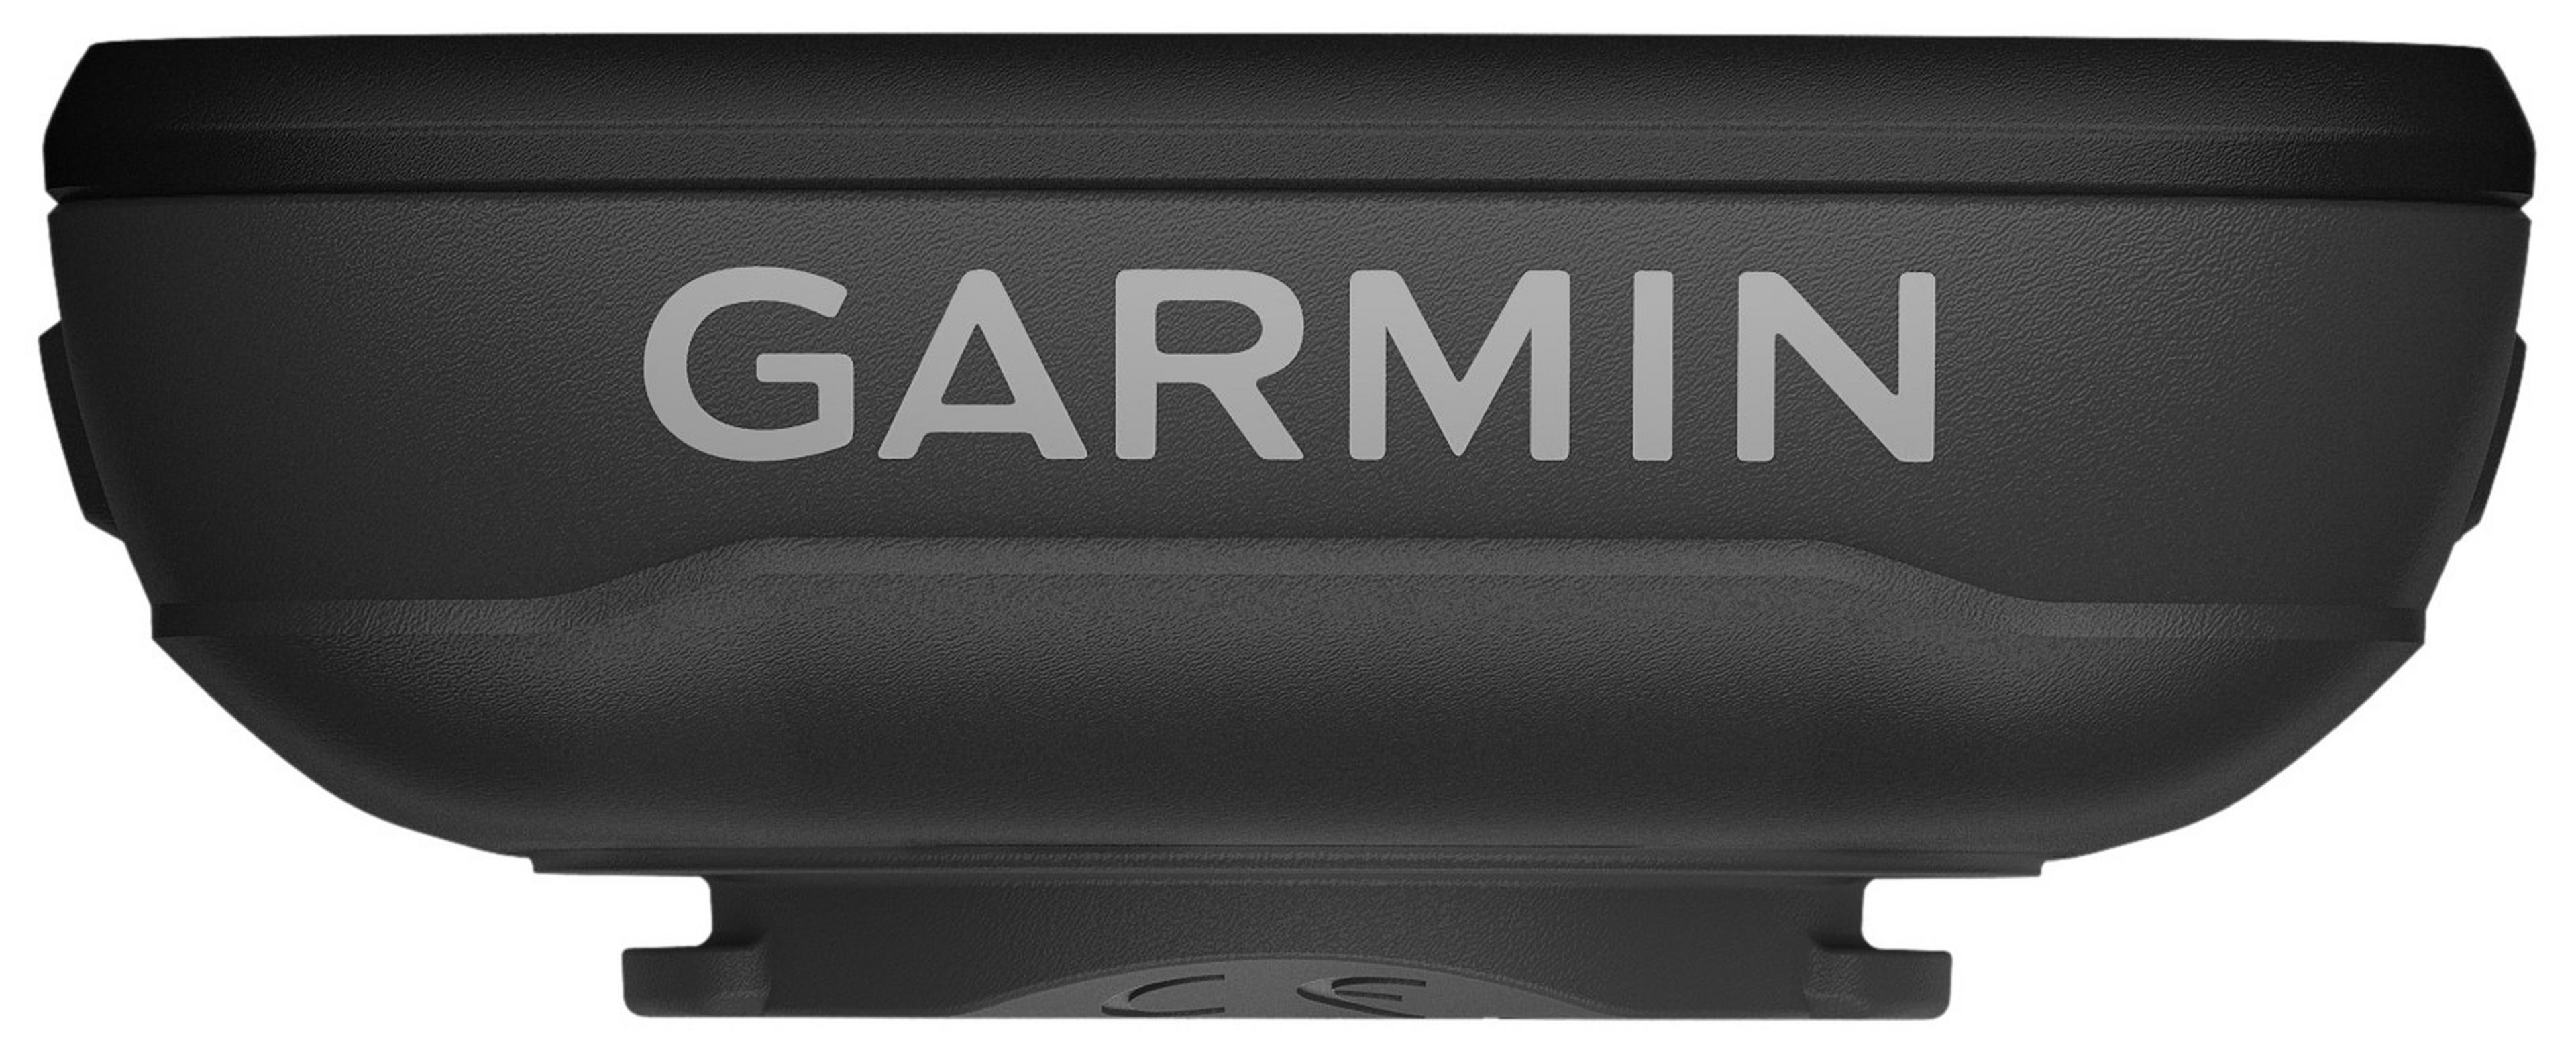 Garmin Edge 530 GPS Bike Computer Navigation System, 54% OFF